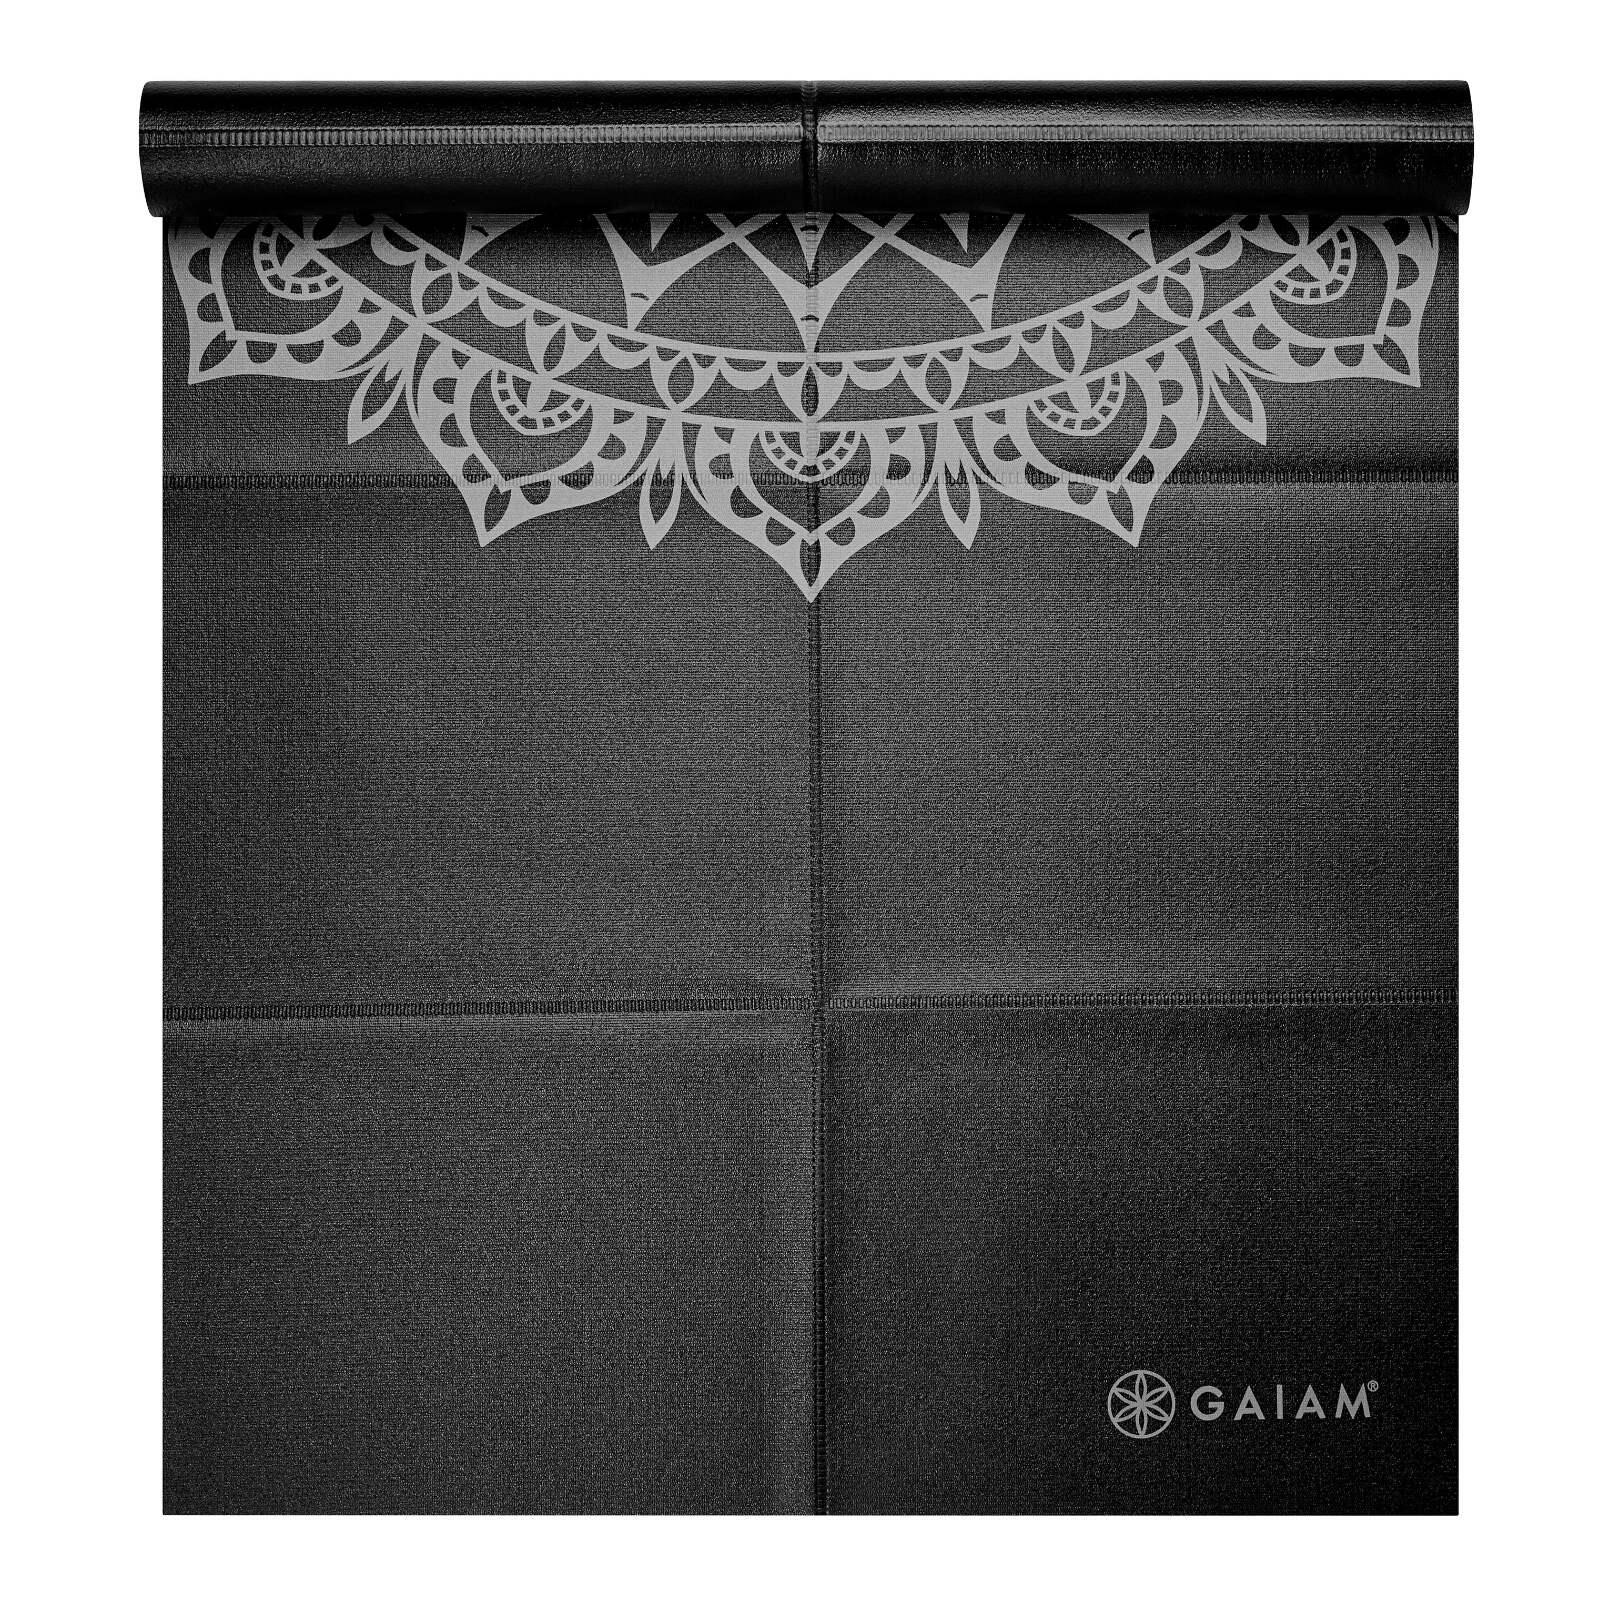 Gaiam Foldable Yoga Mat 2mm - Midnight Marrakesh GAIAM